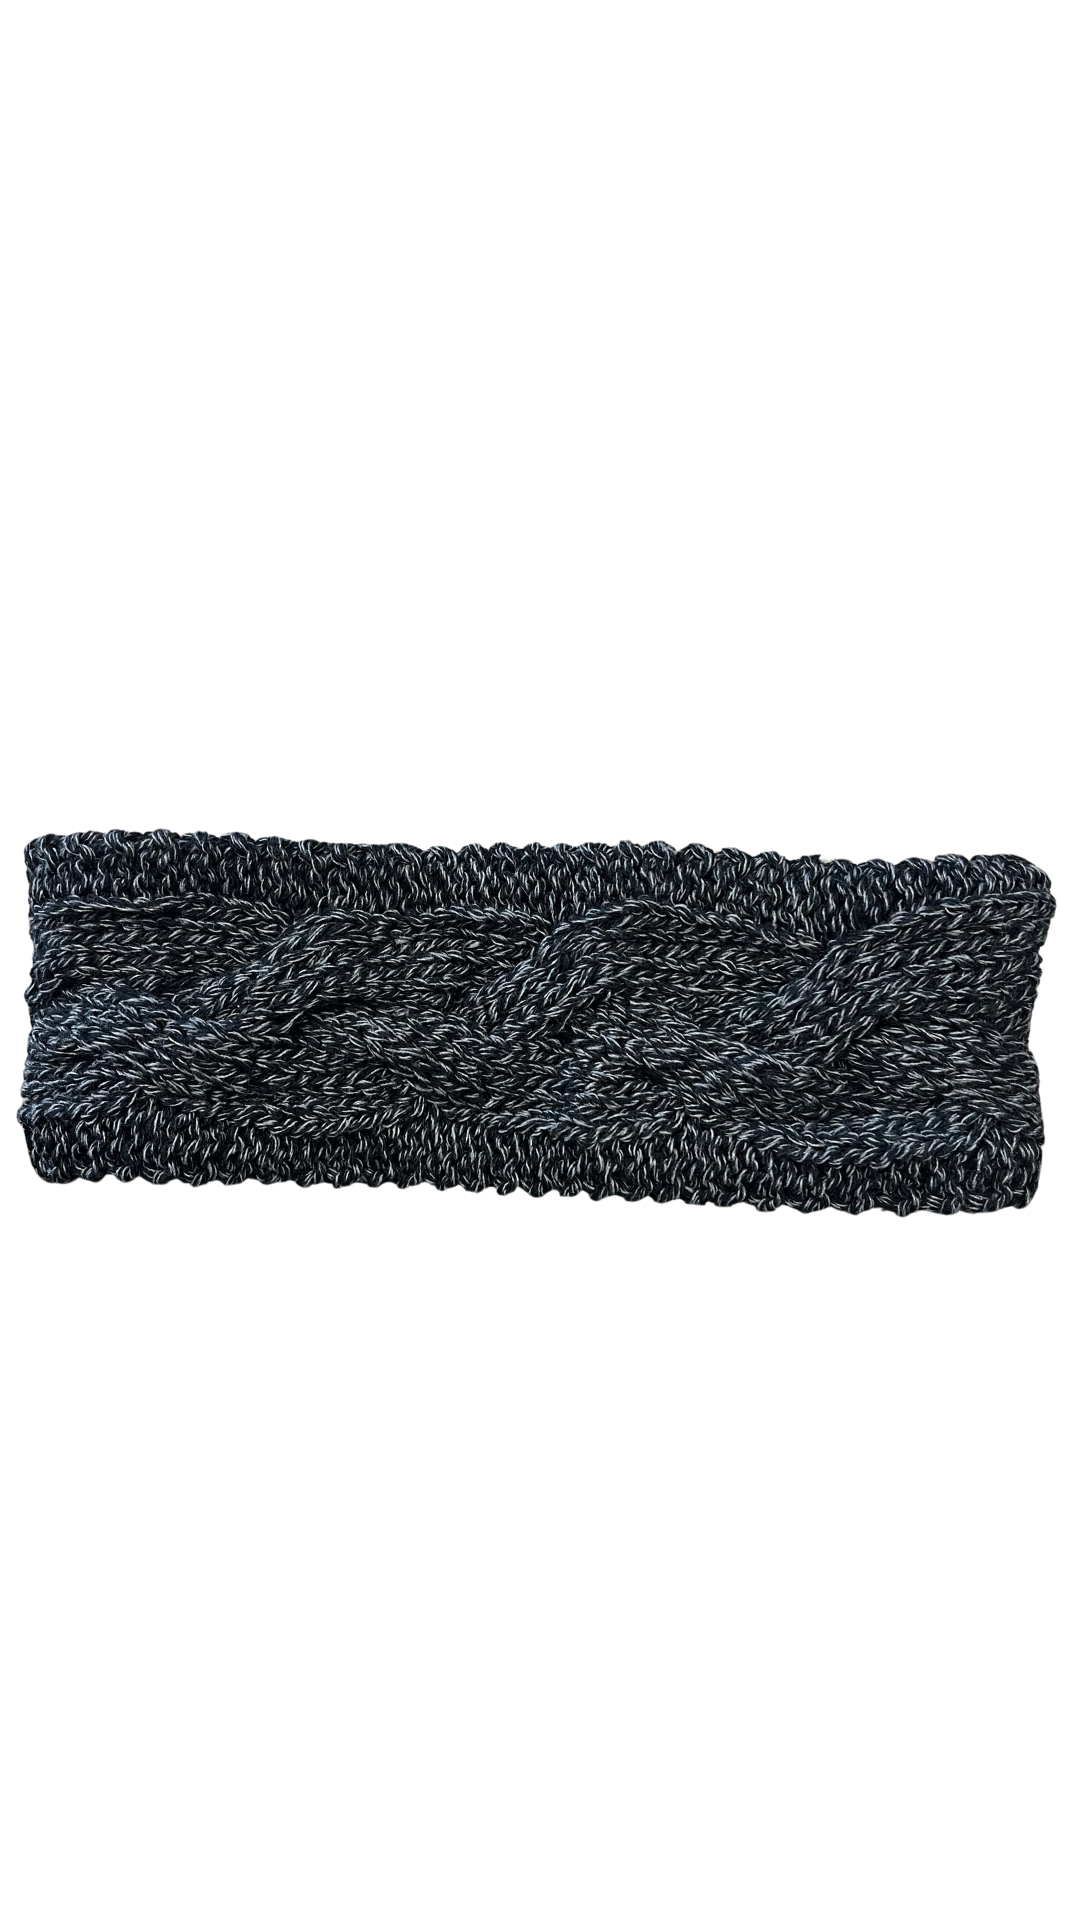 Black Tweed Knit Fleece Lined Headband. Style PH8117